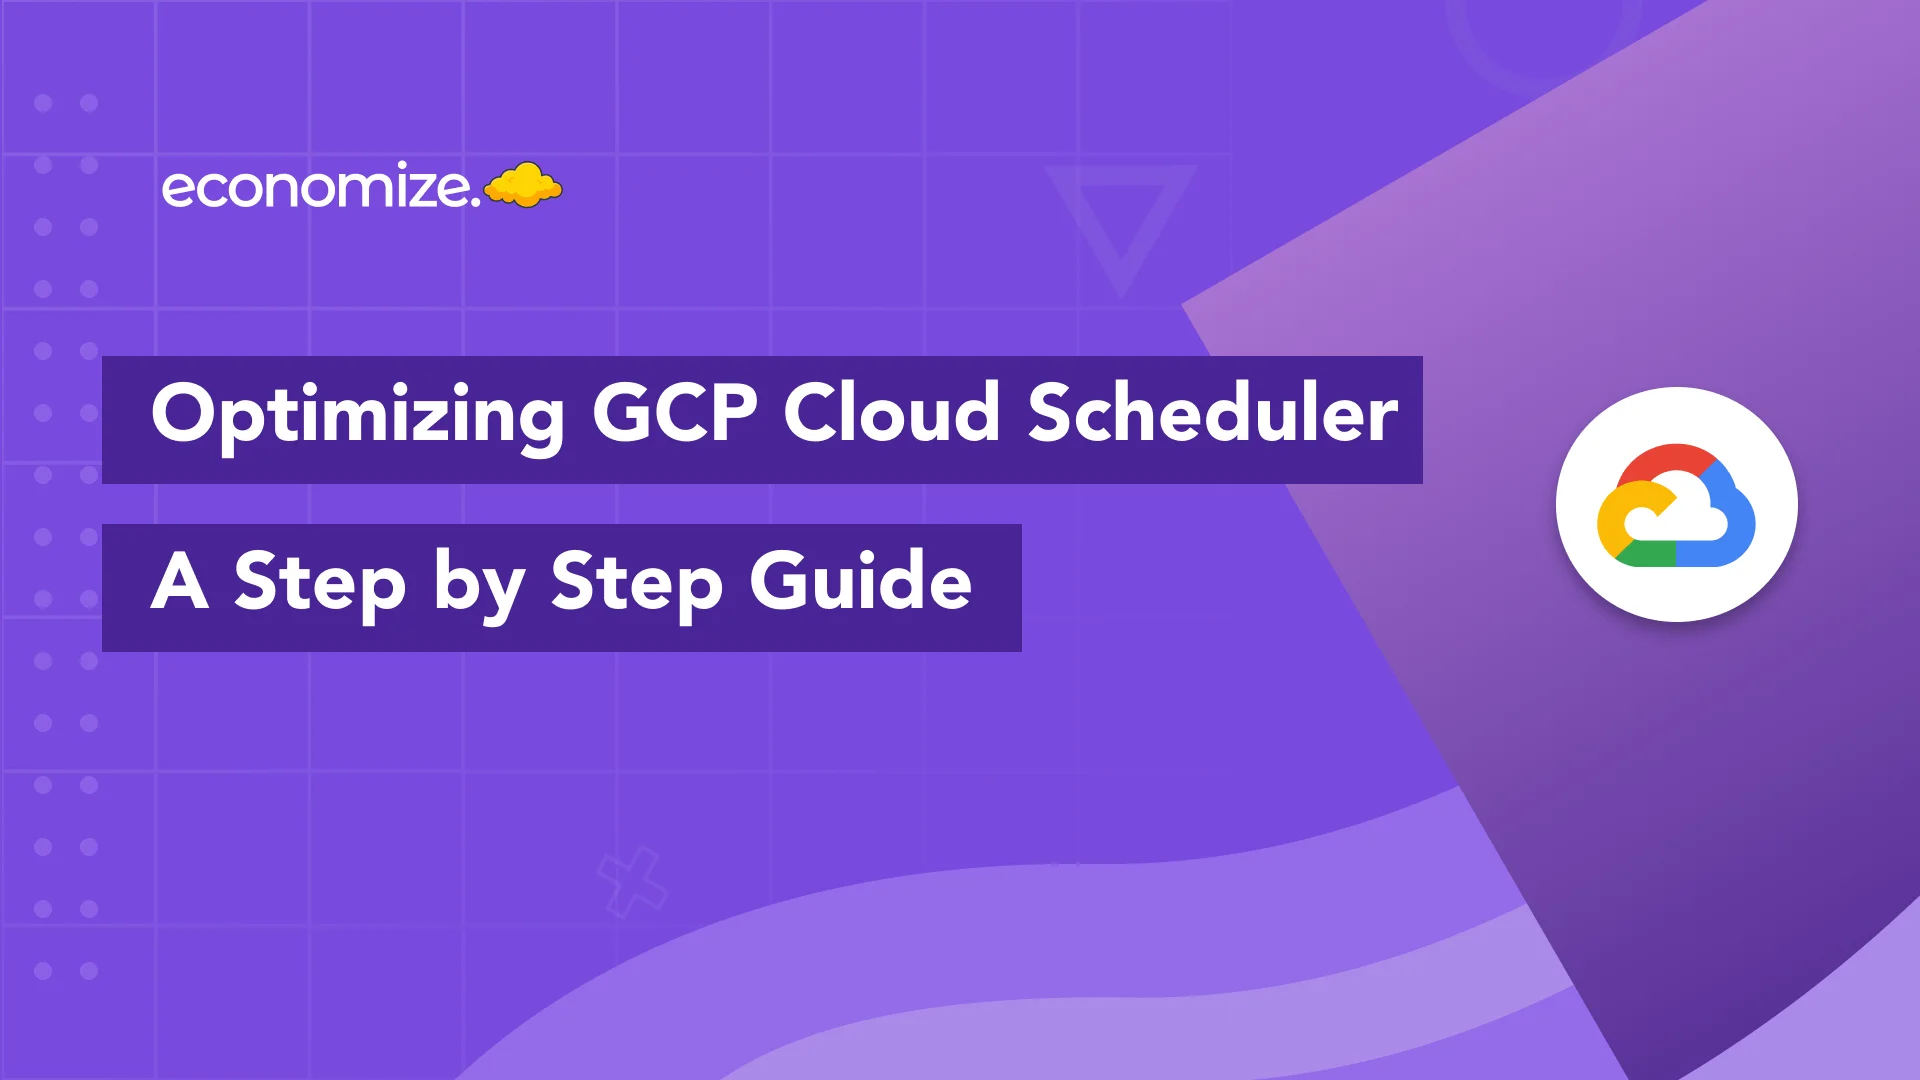 GCP, Google Cloud Scheduler, Pricing, Best Practices, Strategies, FinOps, Cost Optimization